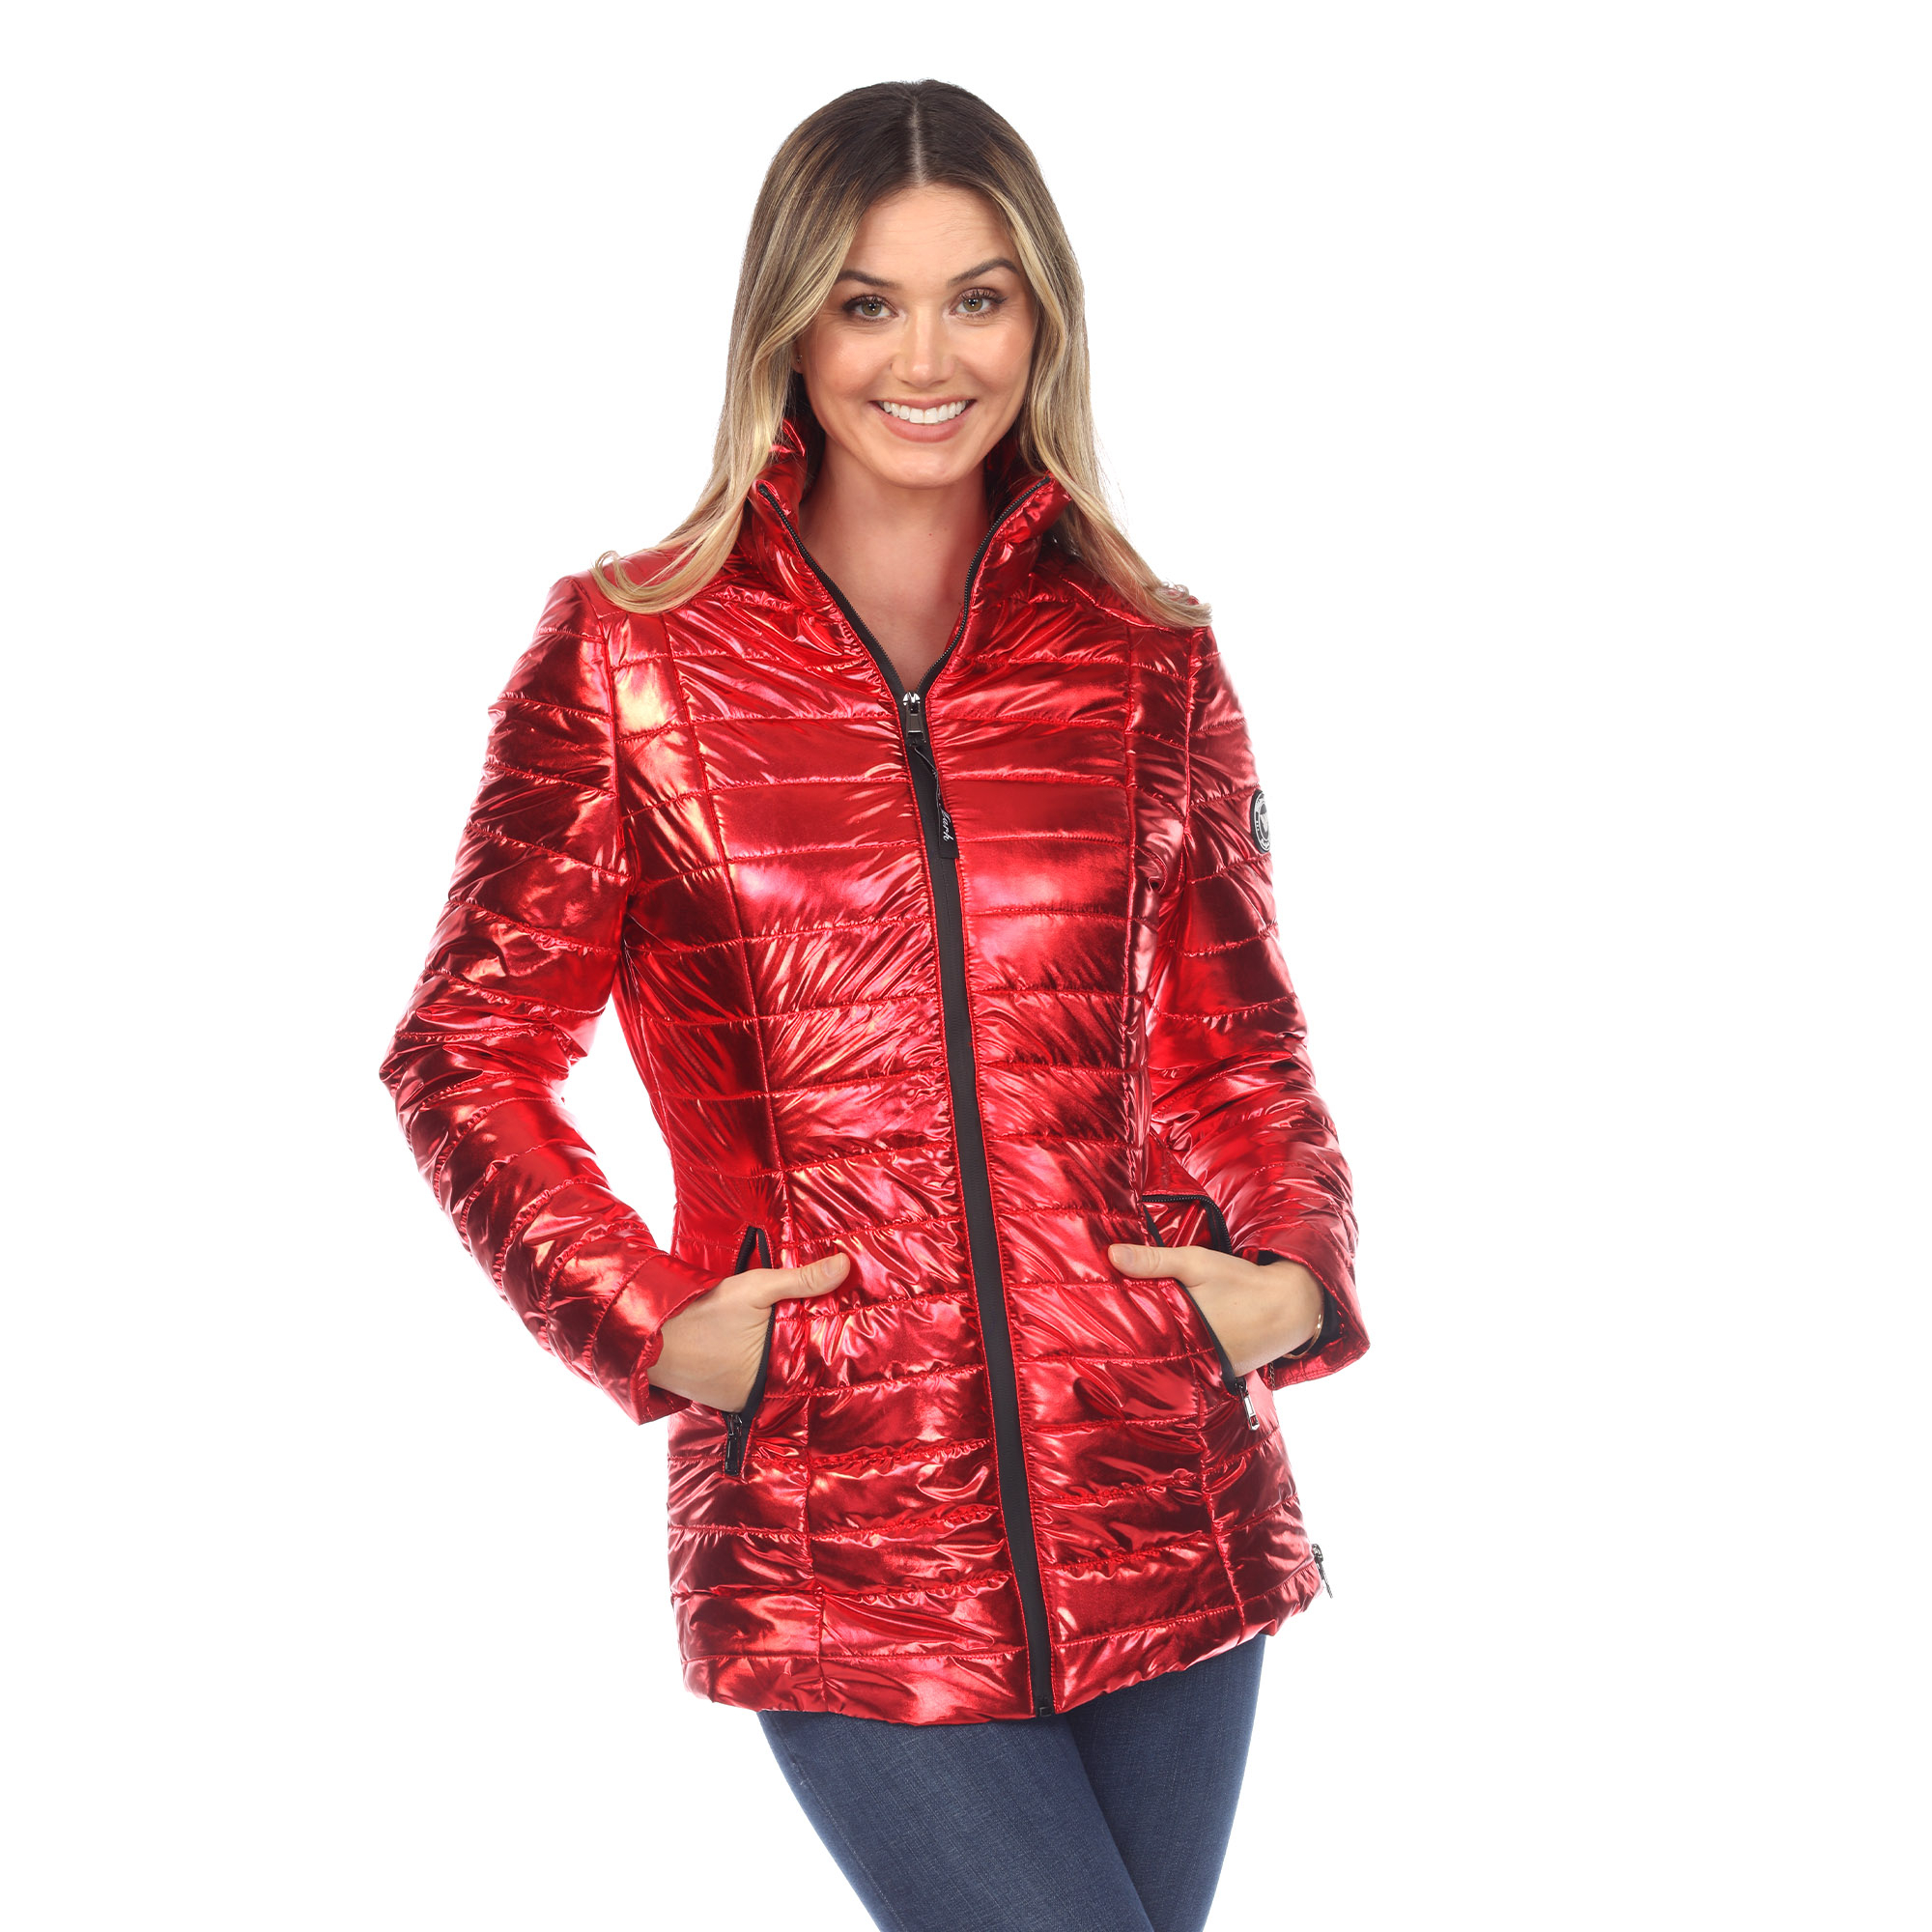 White Mark Womenâs Metallic Puffer Coat - Red, Large